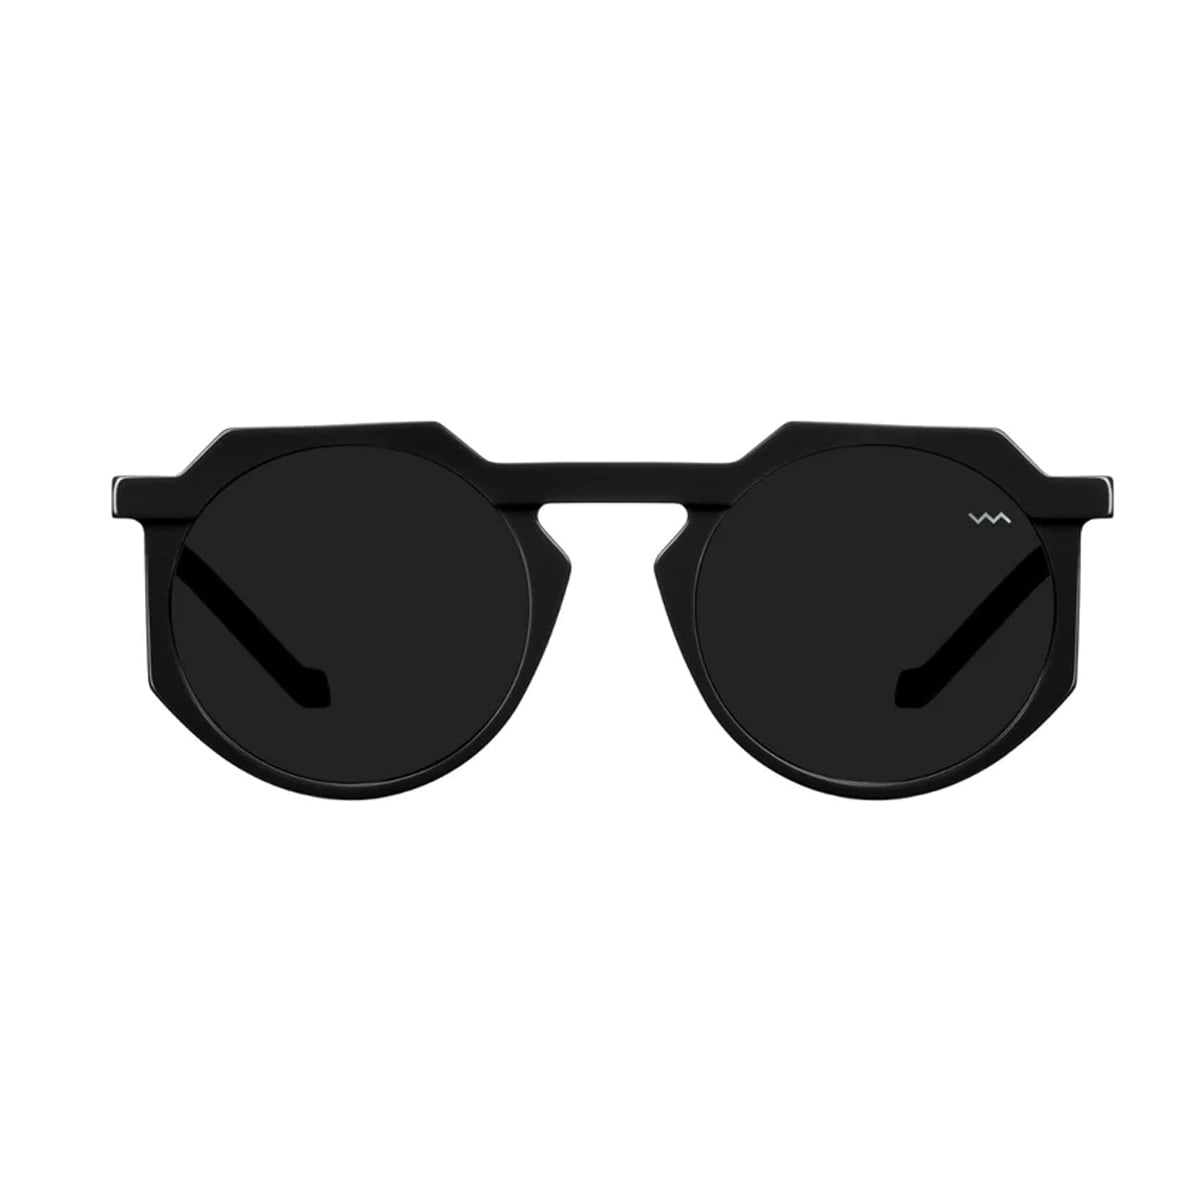 Wl0028 Black Sunglasses